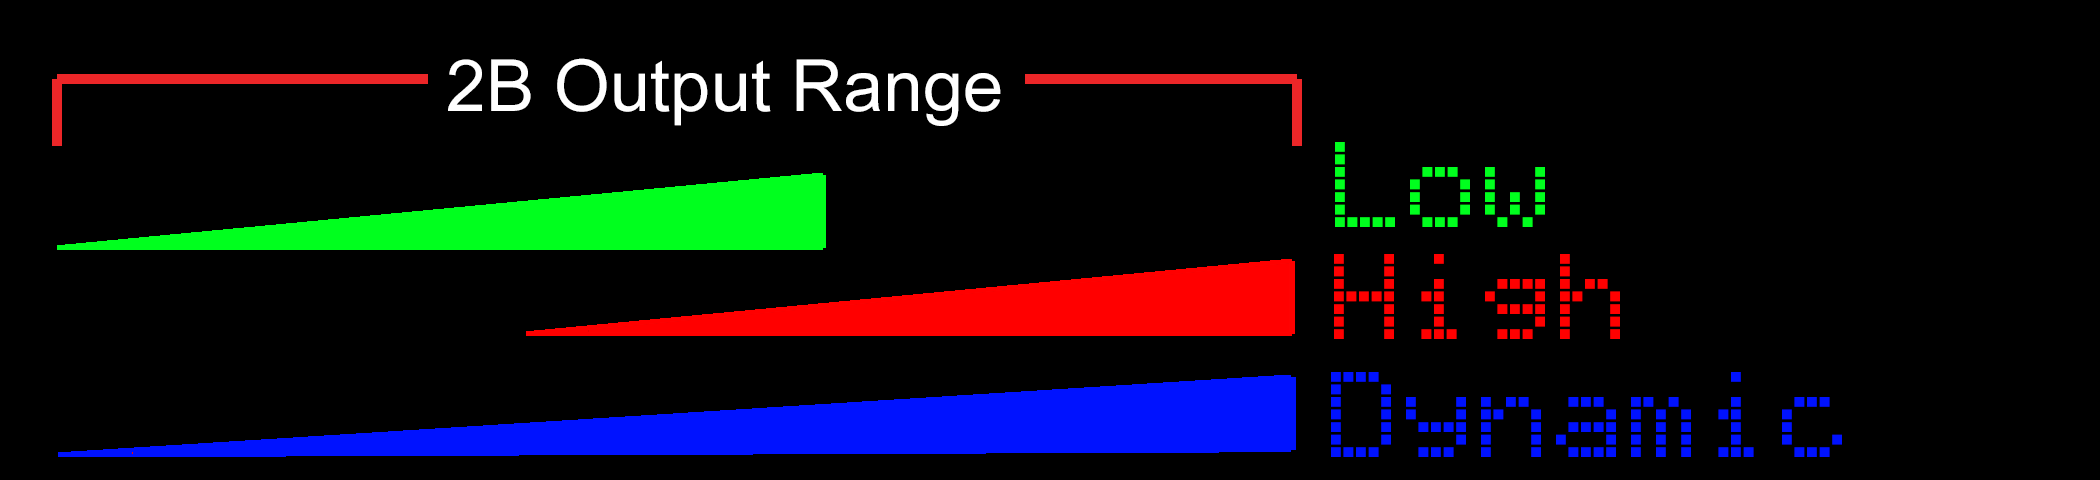 2B Output Range